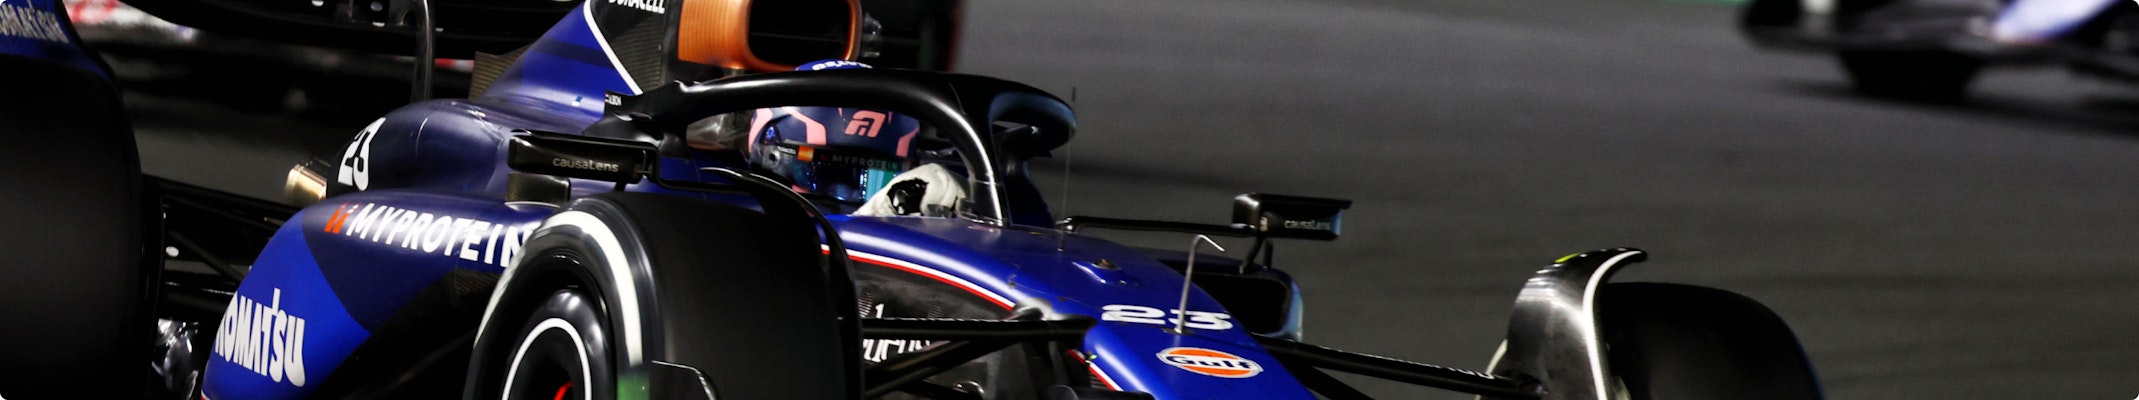 Williams Racing F1  Car